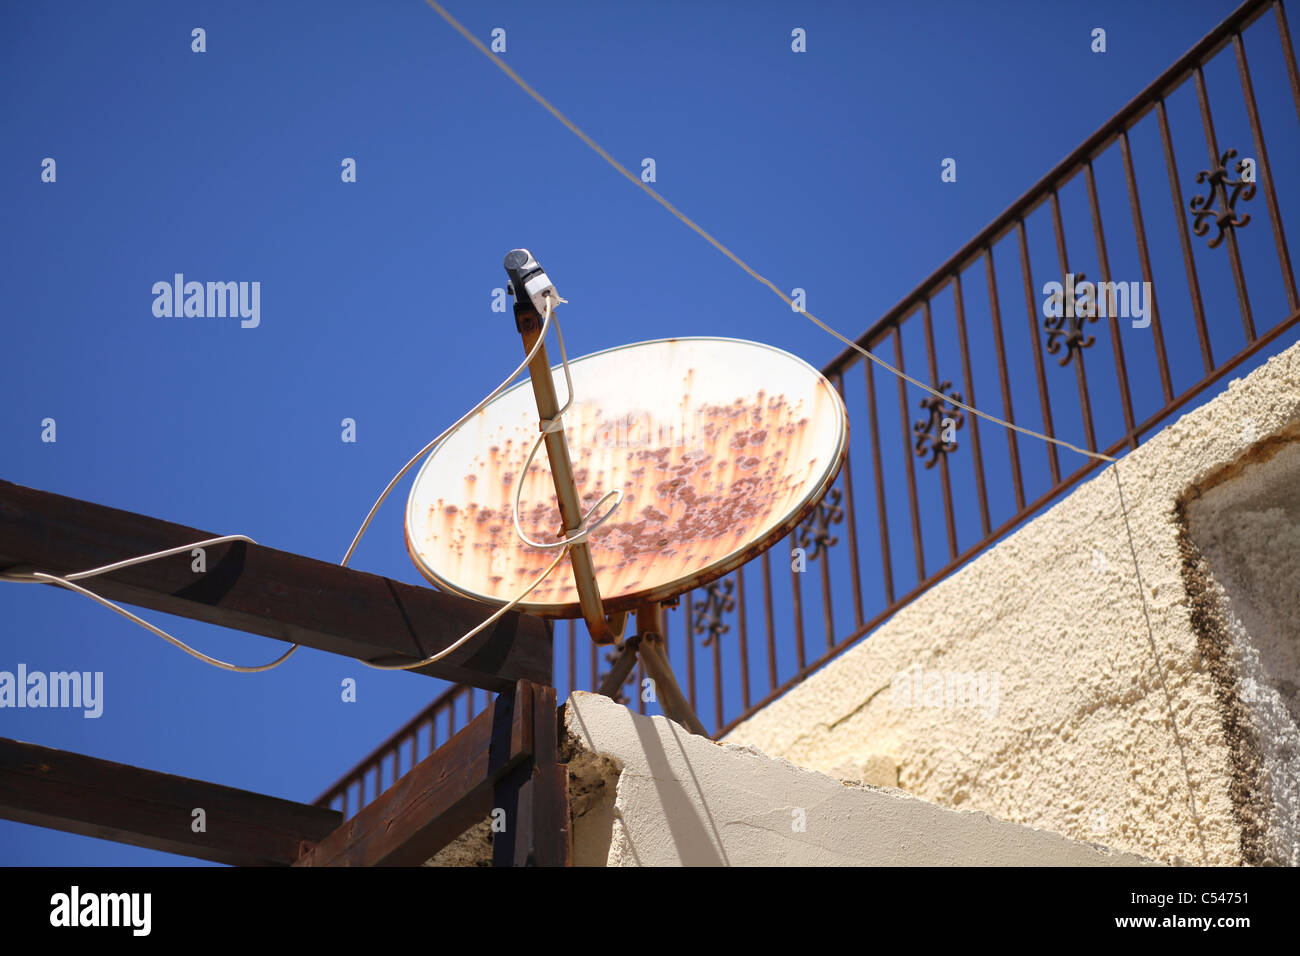 Old Tv Antenna Satellite Dish On Stock Photo (Edit Now) 1165678780